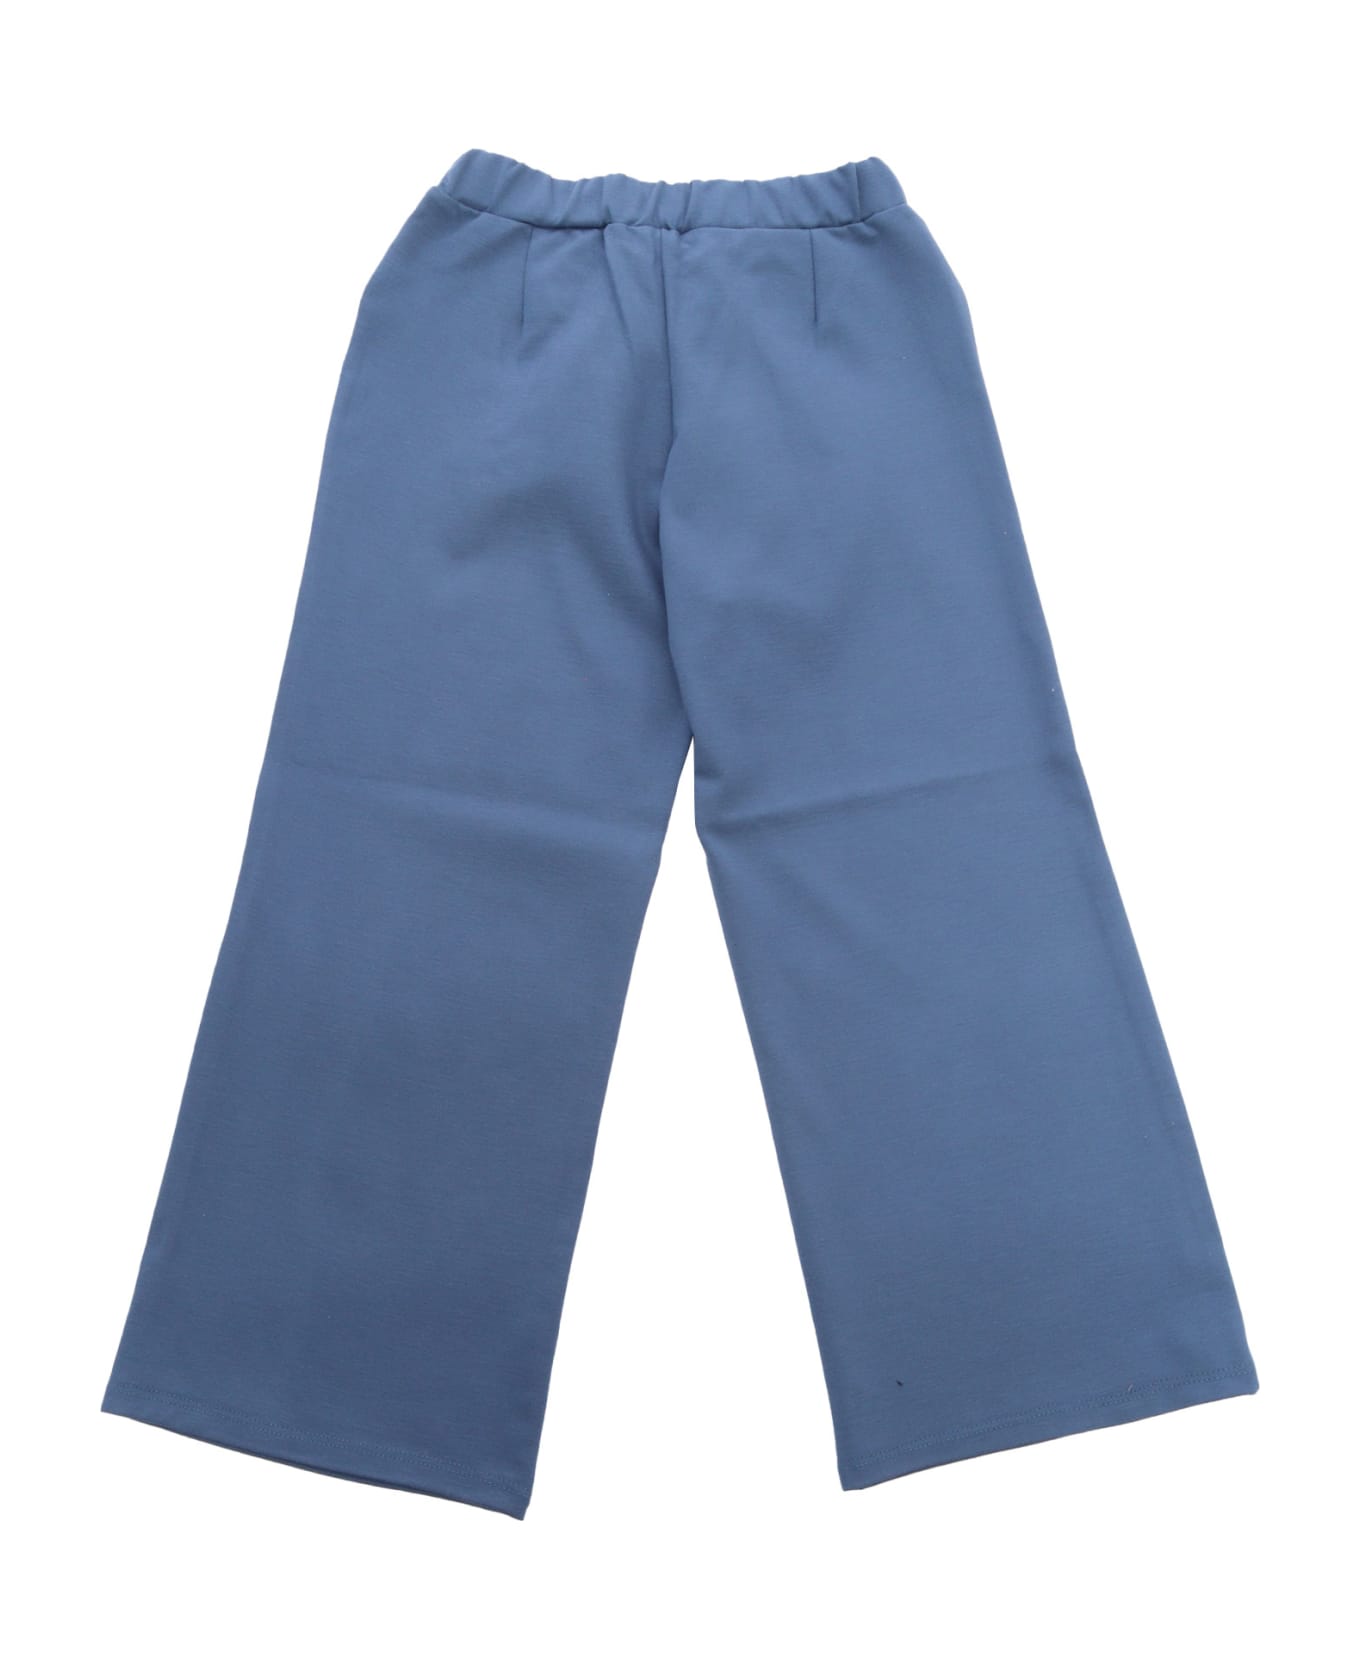 Magil Milano Stitch Gaucho Pants - LIGHT BLUE